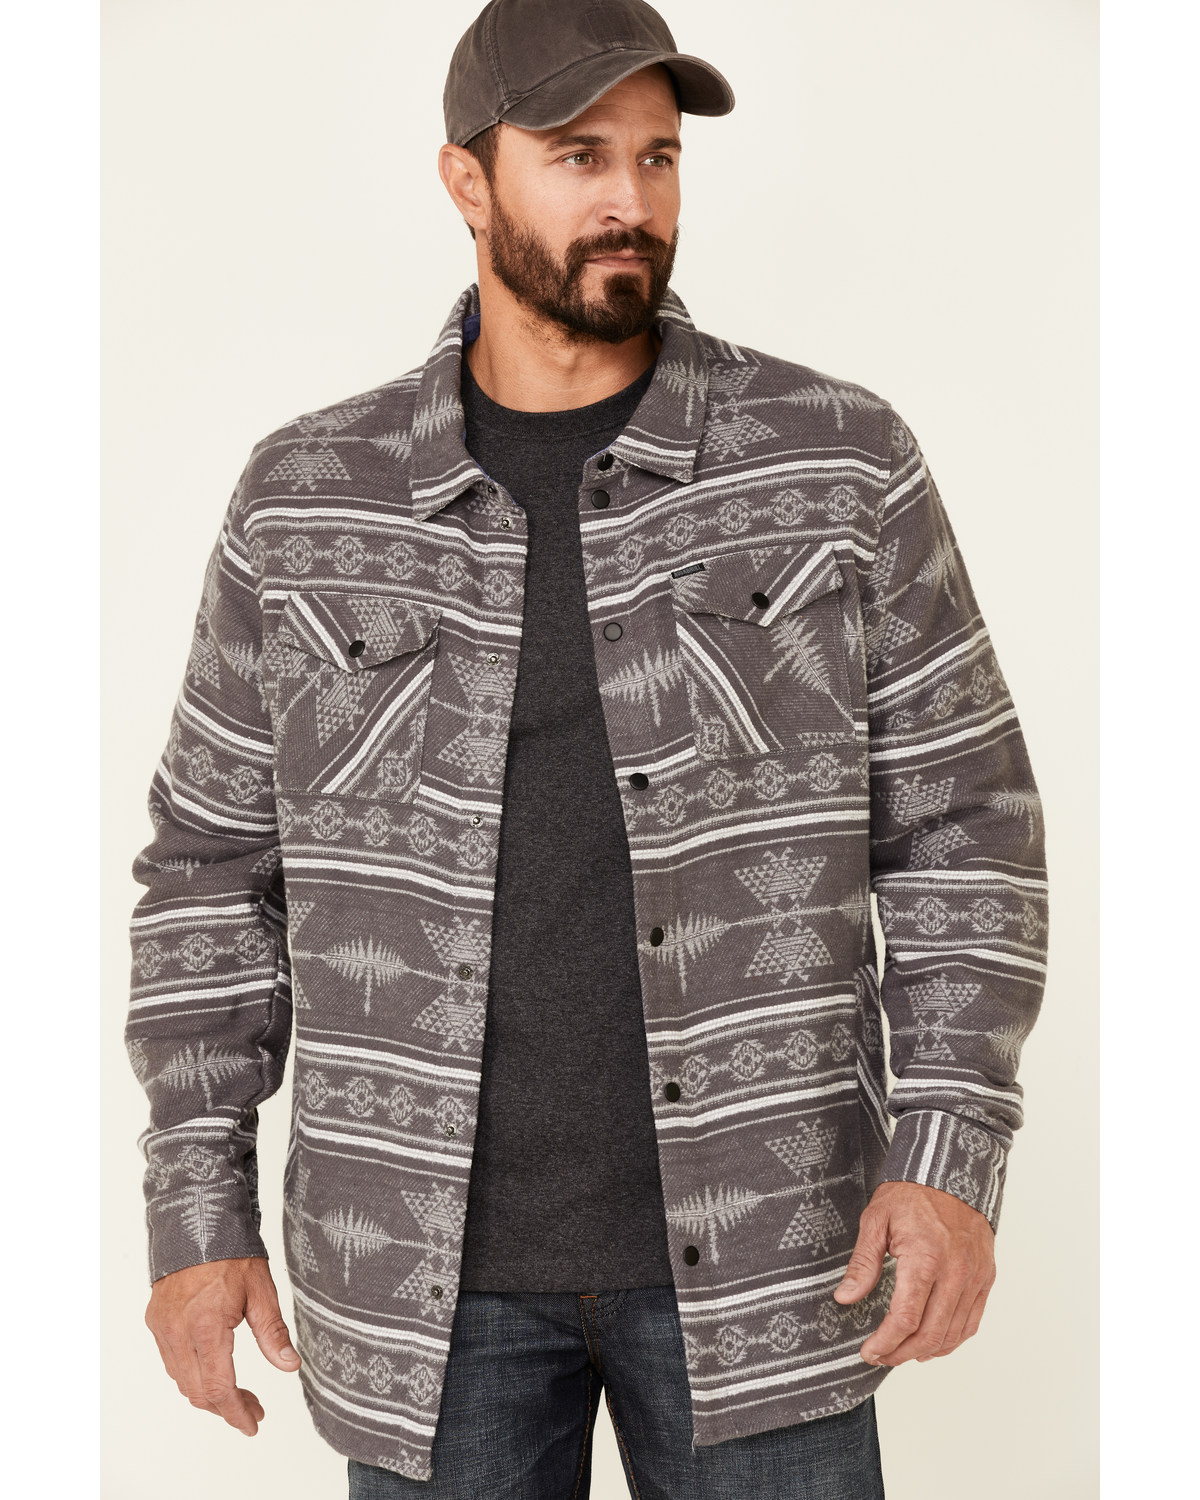 Rock & Roll Denim Men's Southwestern Jacquard Print Long Sleeve Button Down Shirt Jacket